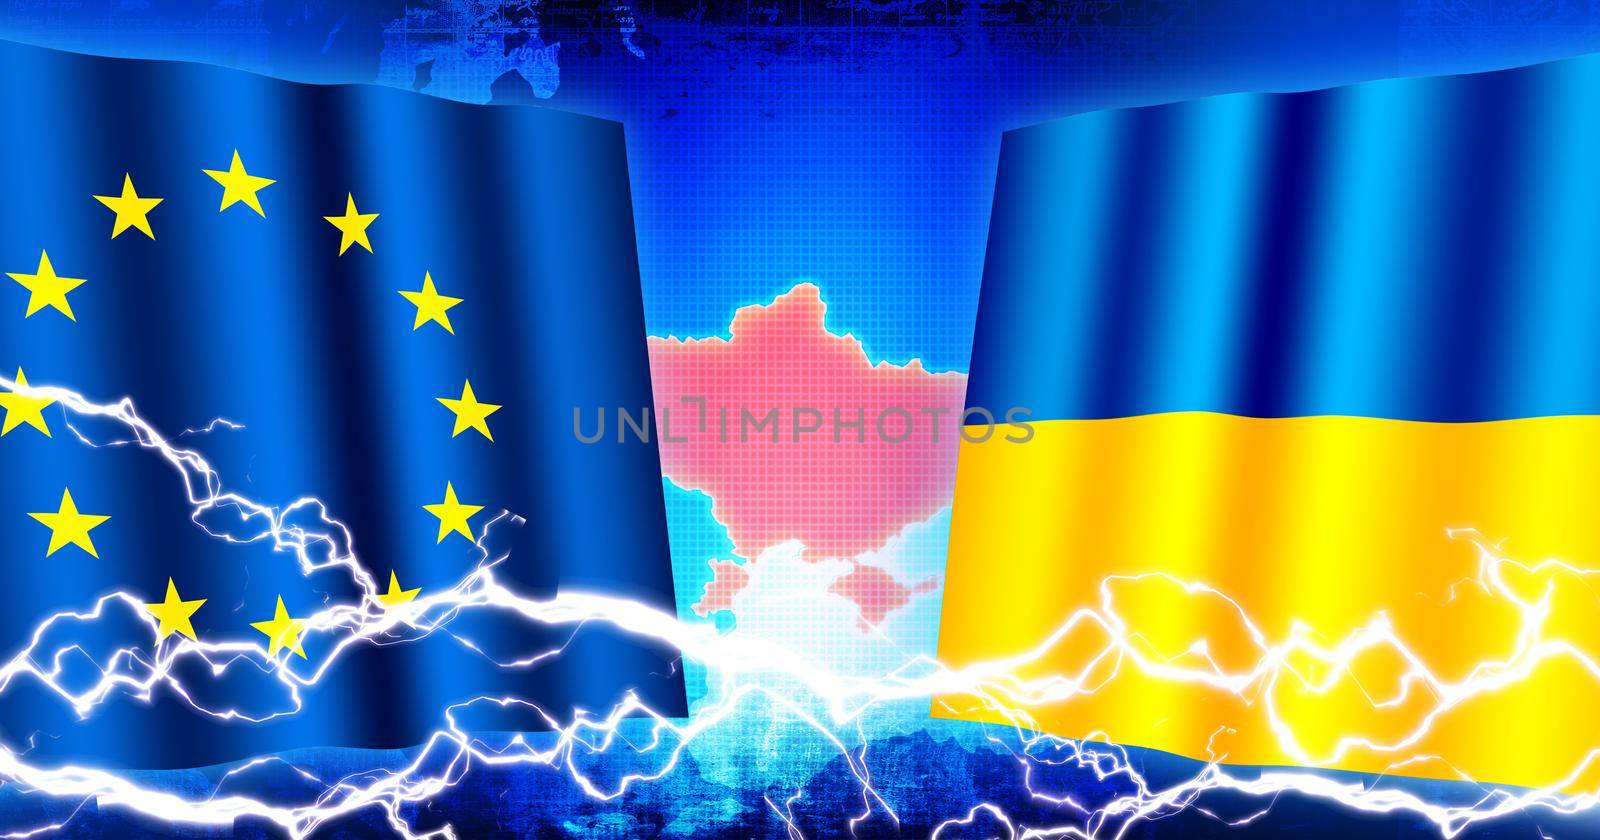 Ukraine vs EU (Russo-Ukrainian War ). Web banner illustration by barks